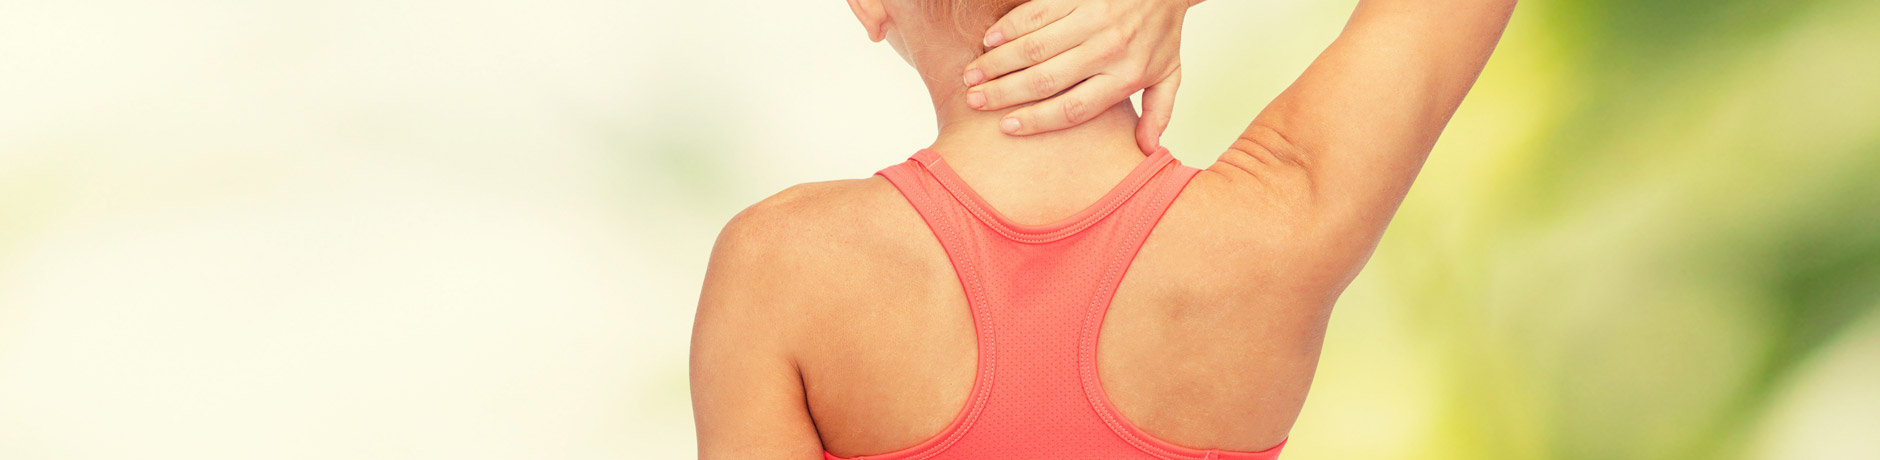 Rücken Fitness - mit Bewegung gegen den Schmerz